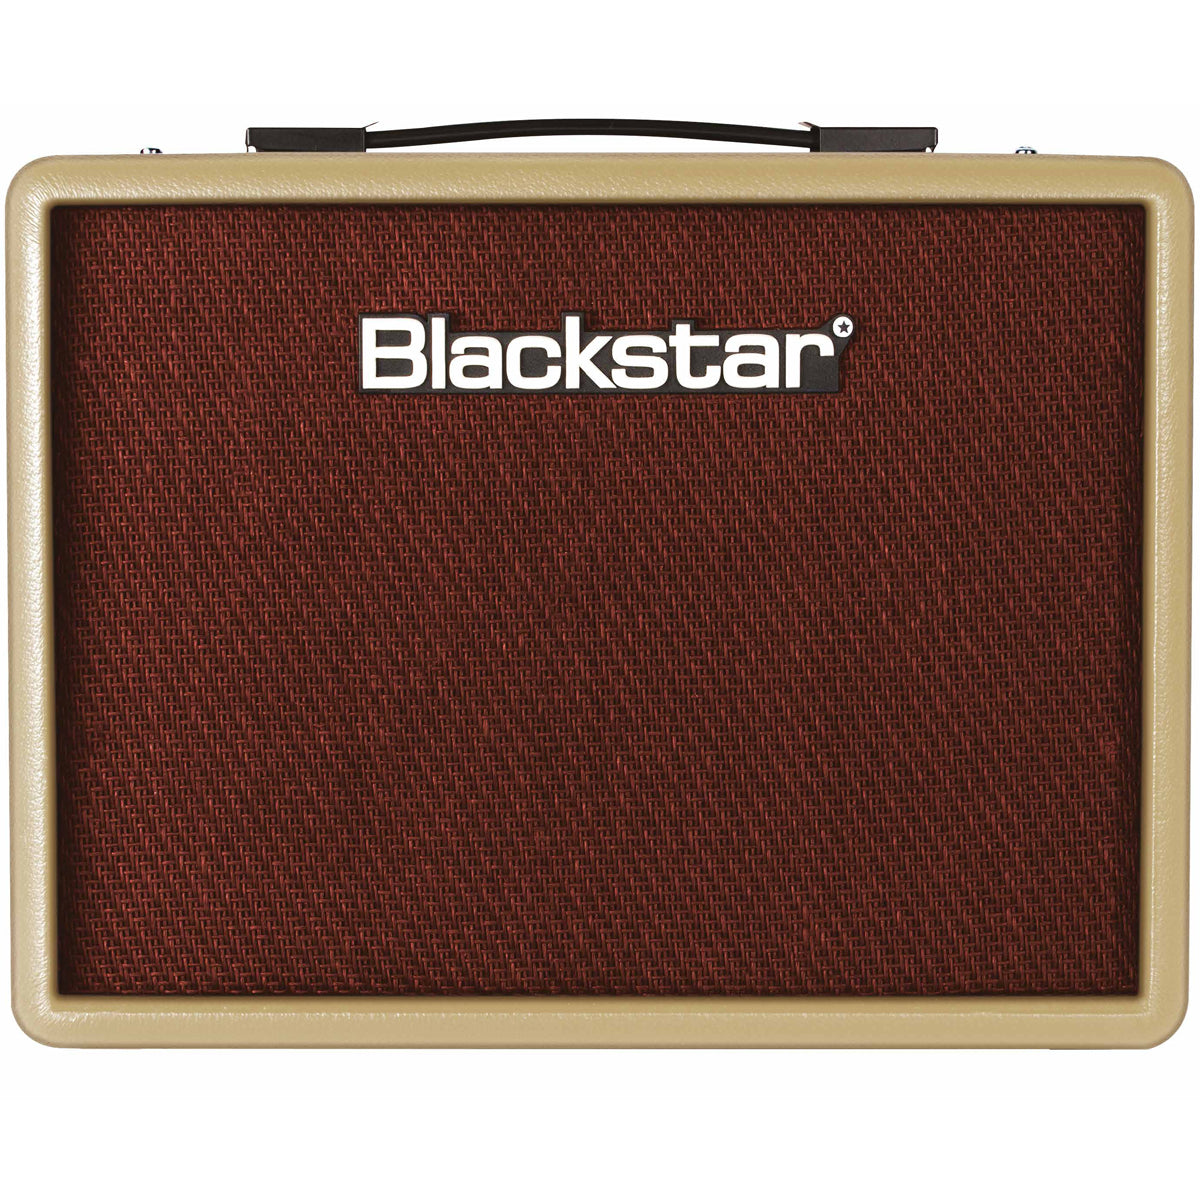 Blackstar Debut 15 Guitar Amplifier 15w Amp w/ FX